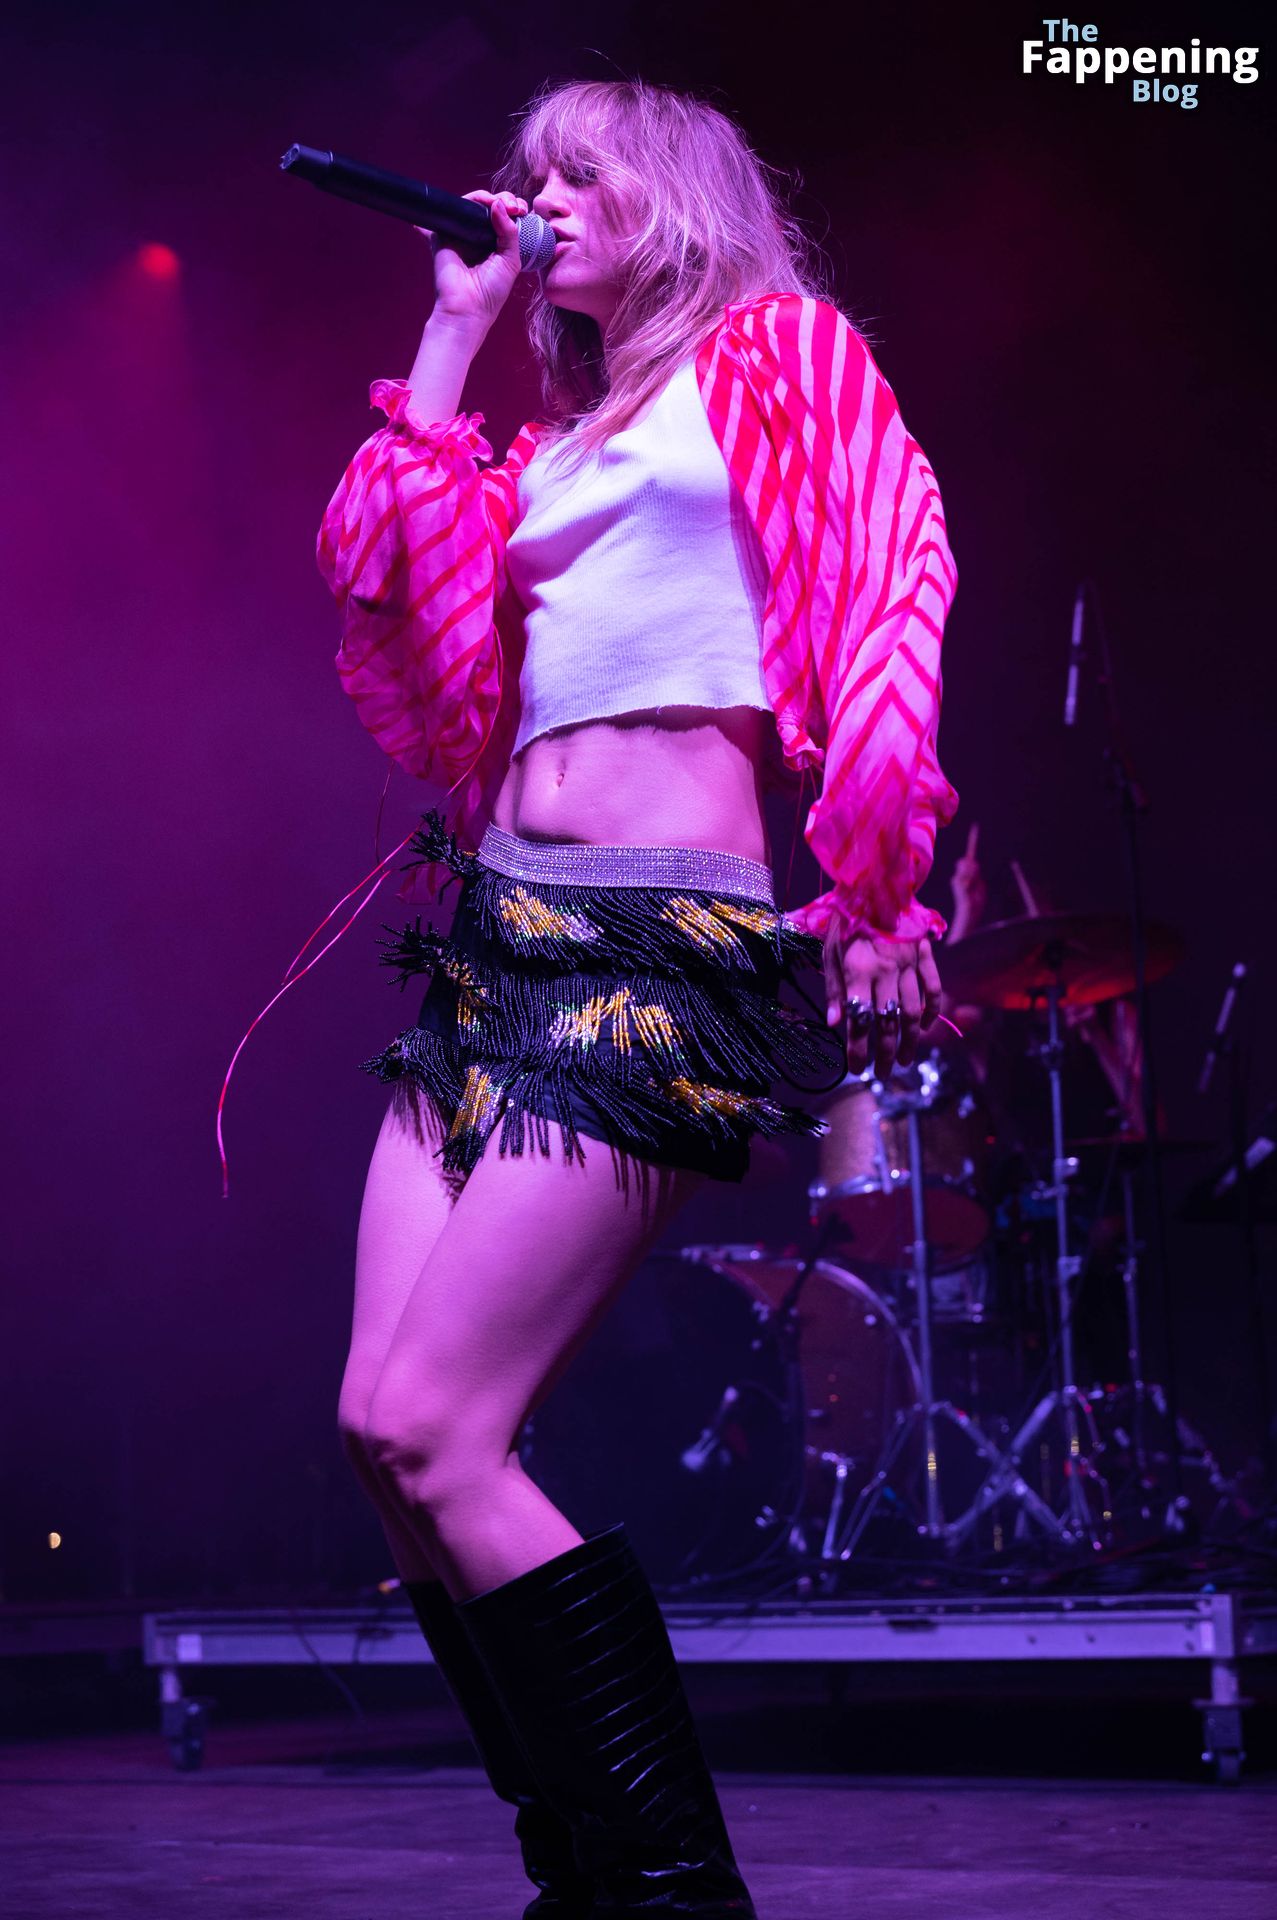 Suki Waterhouse Shows Off Her Pokies on Stage (35 Photos)